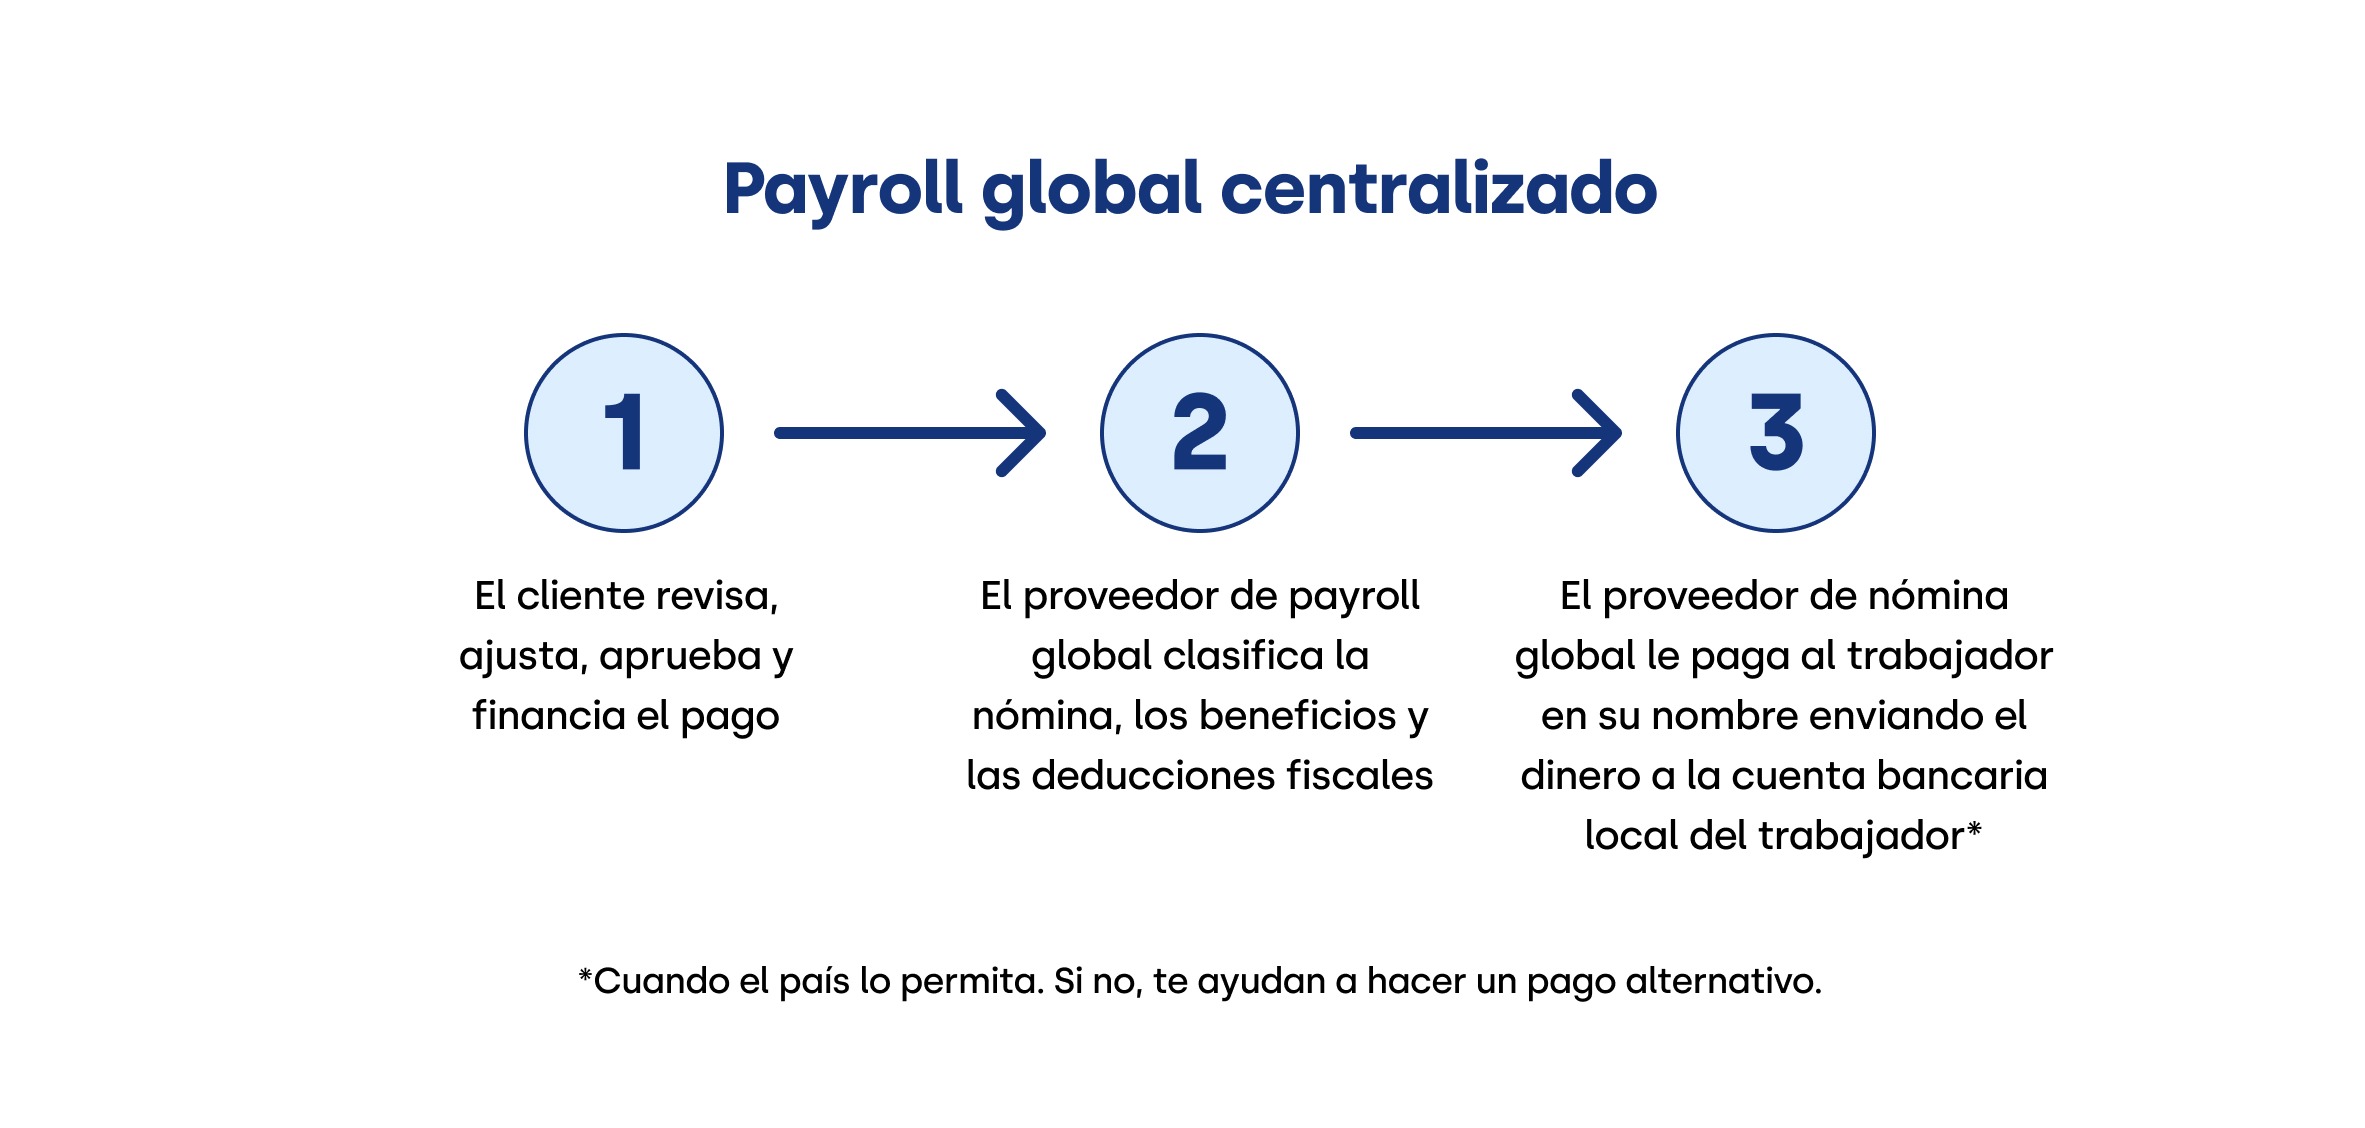 ES Payroll global centralizado - Paso a paso